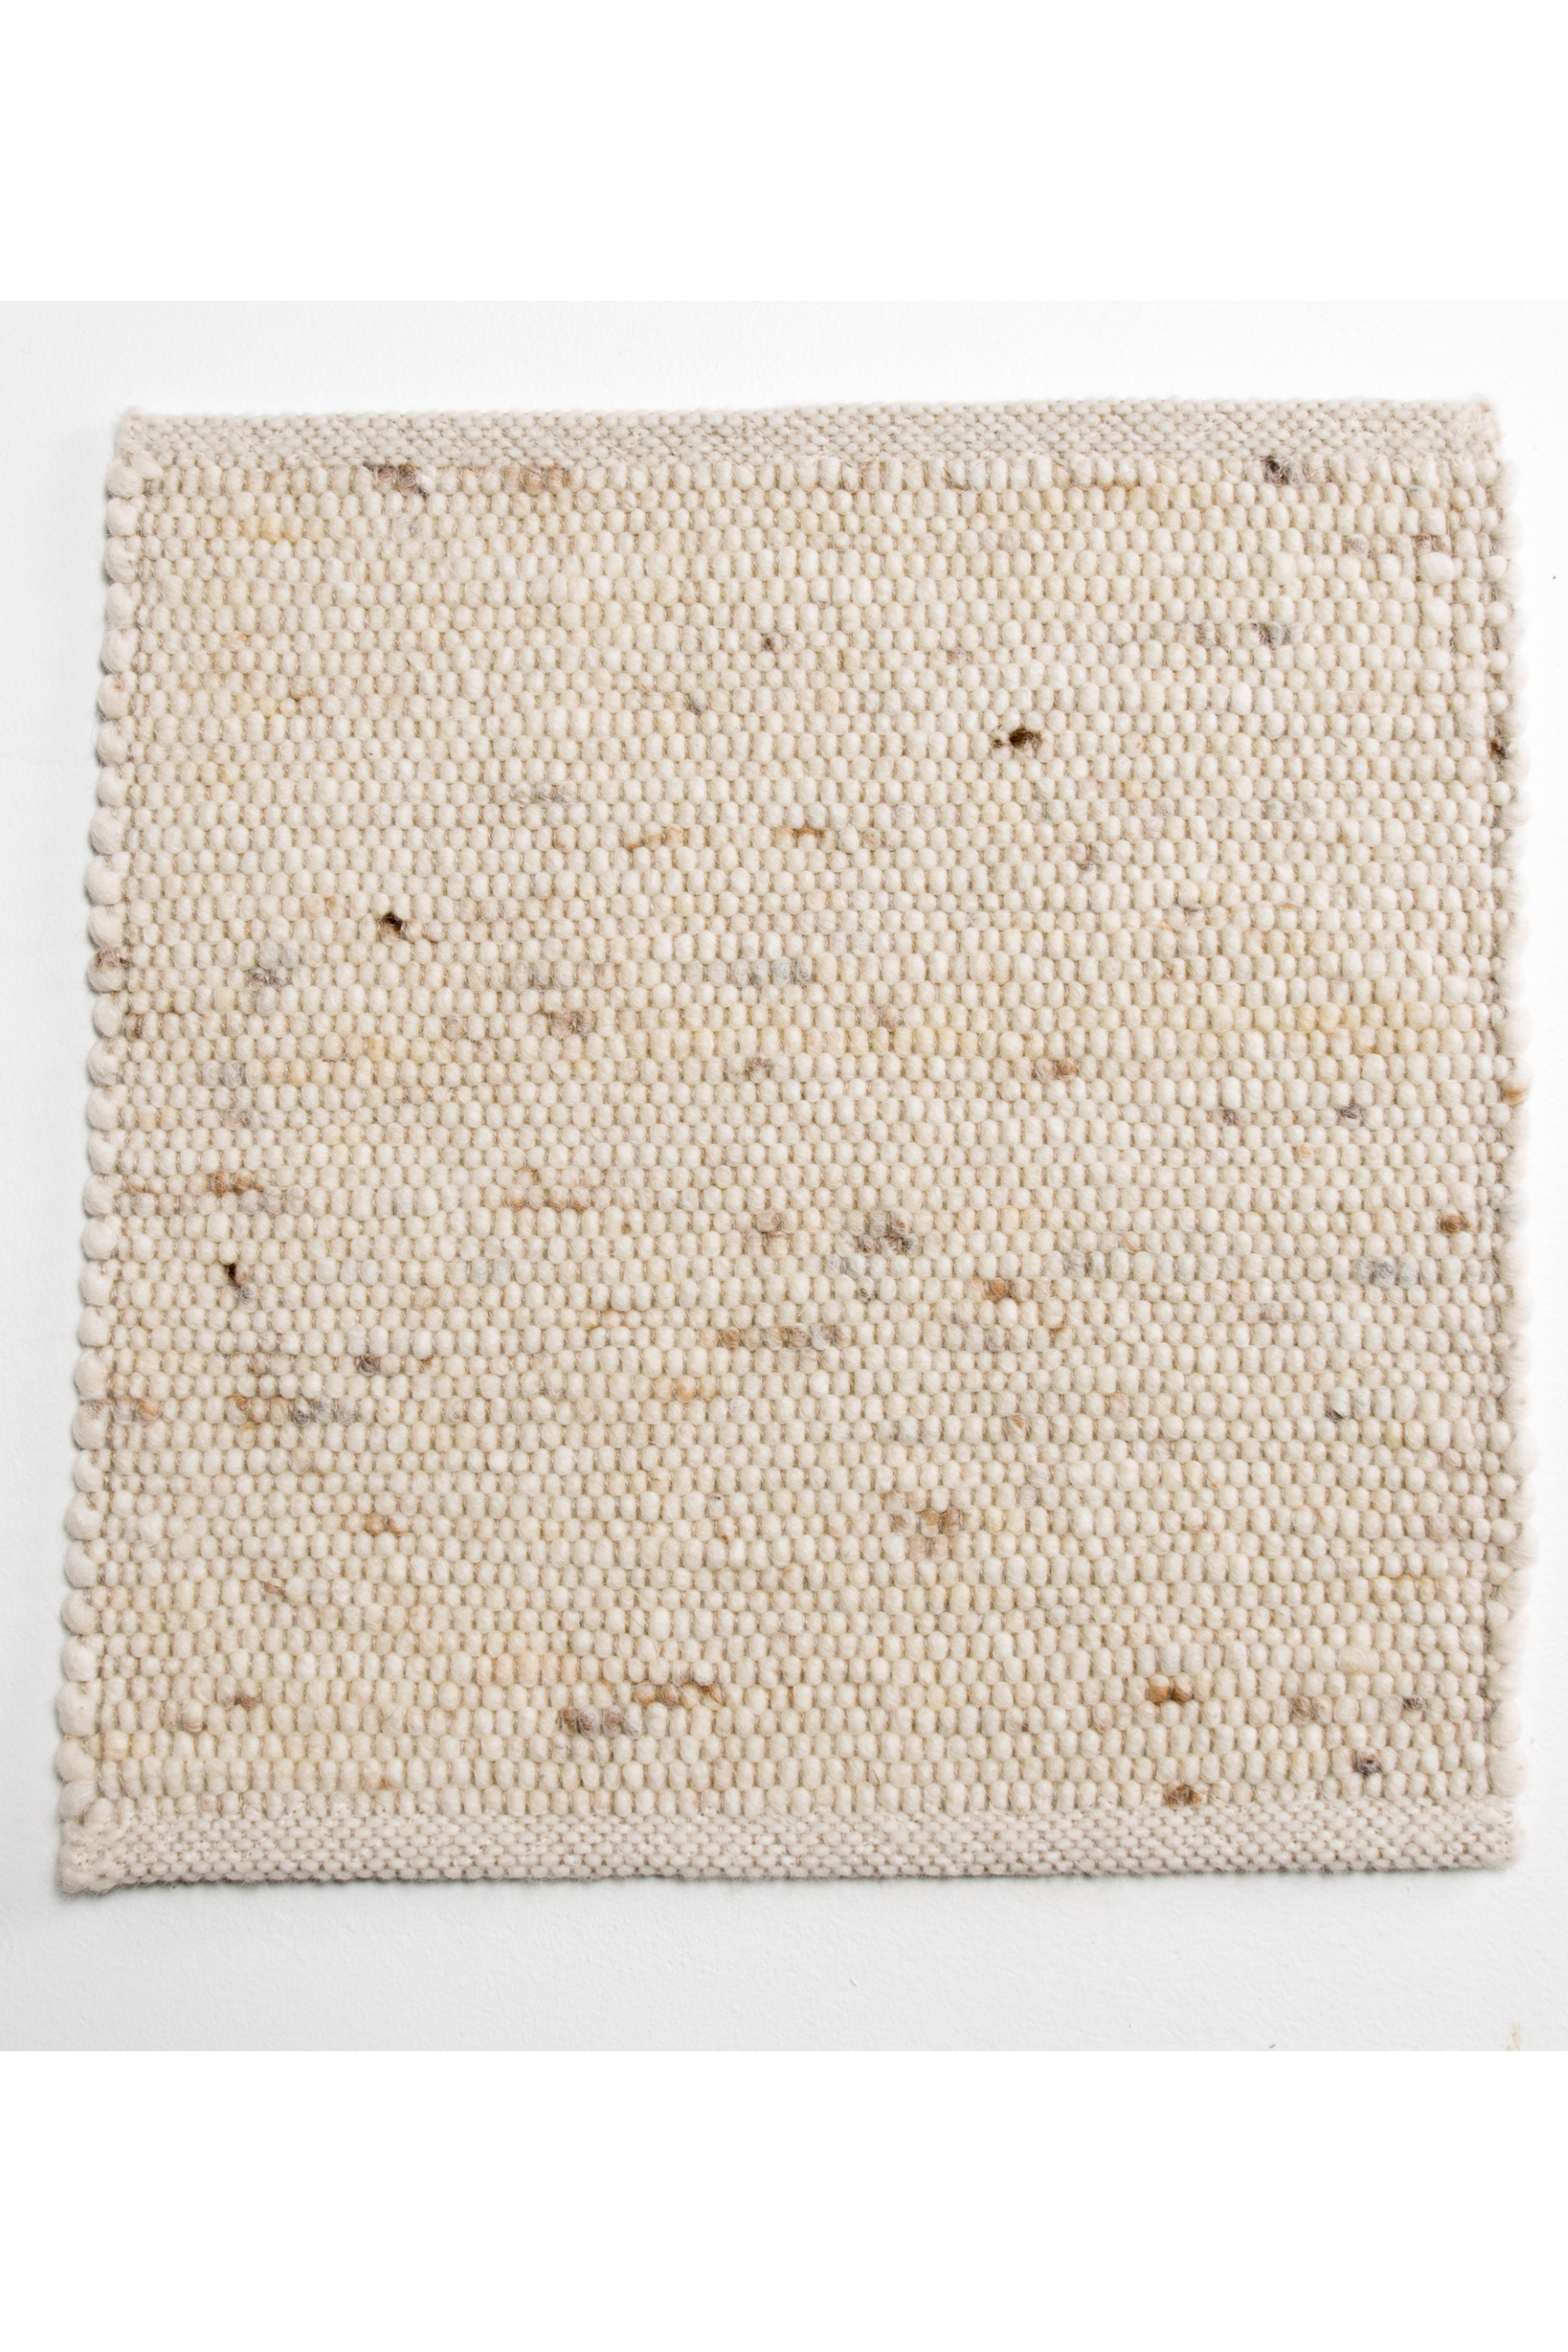 Cream luxury plain handwoven rug